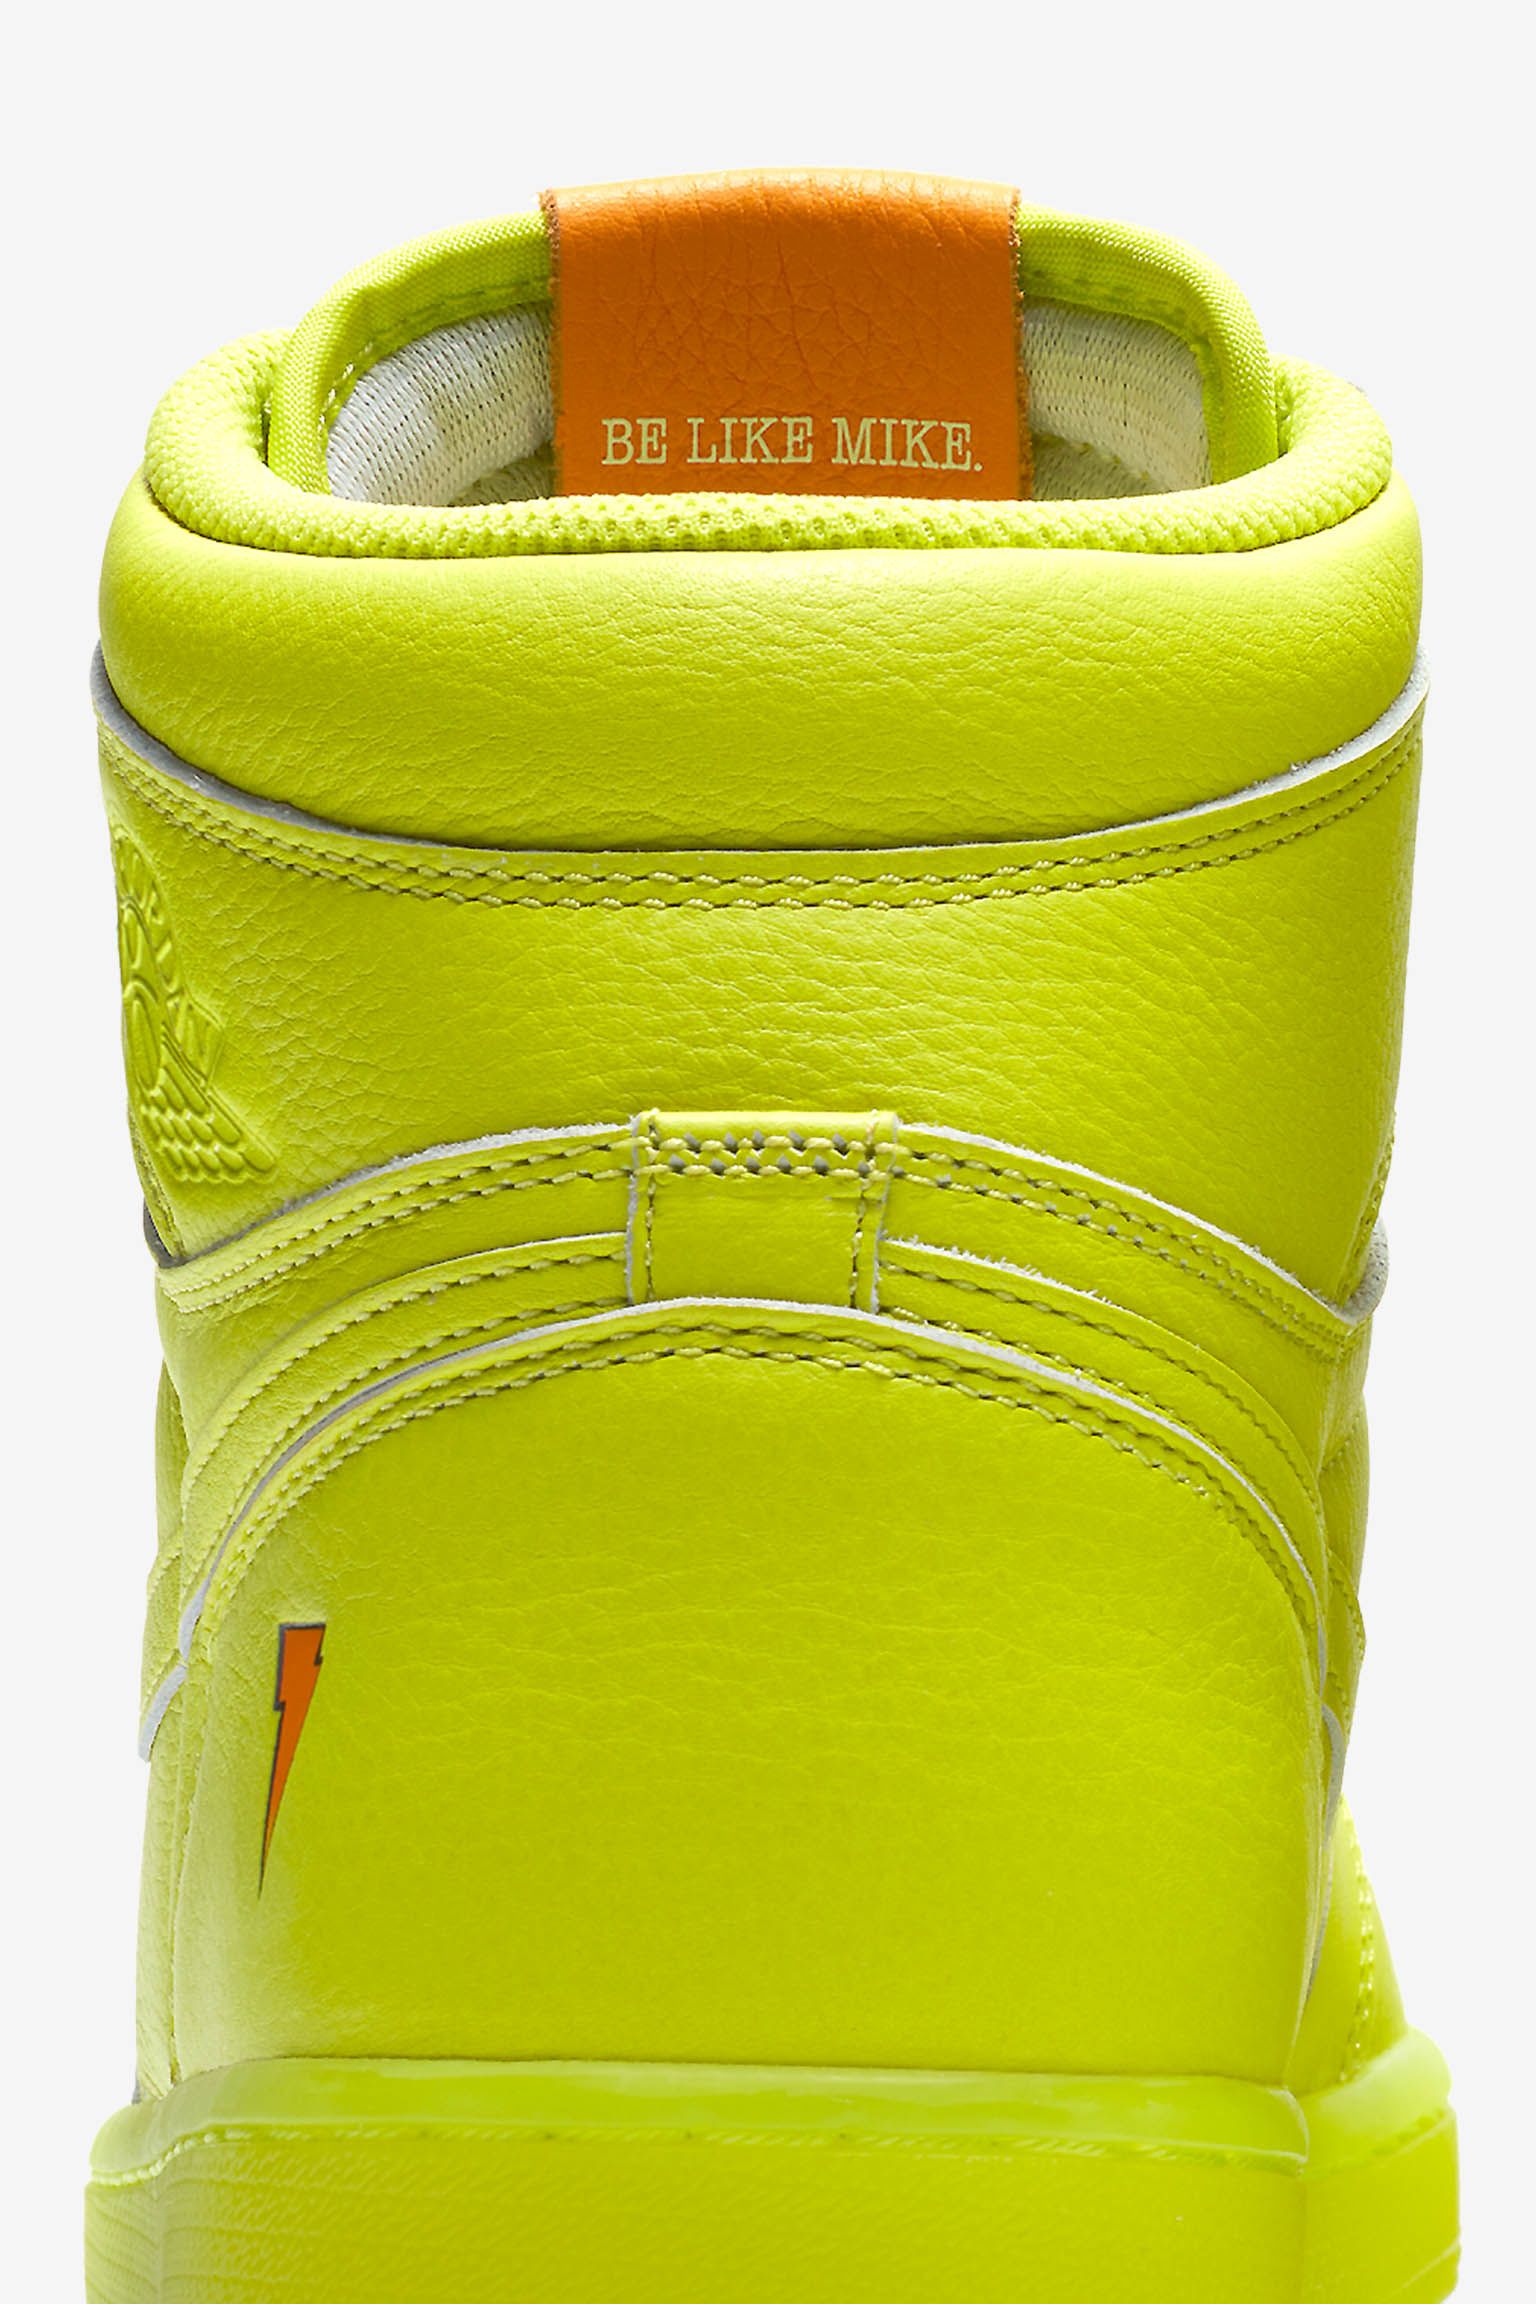 No de moda compensar siglo Fecha de lanzamiento de las Air Jordan 1 High Gatorade "Lemon-Lime". Nike  SNKRS ES